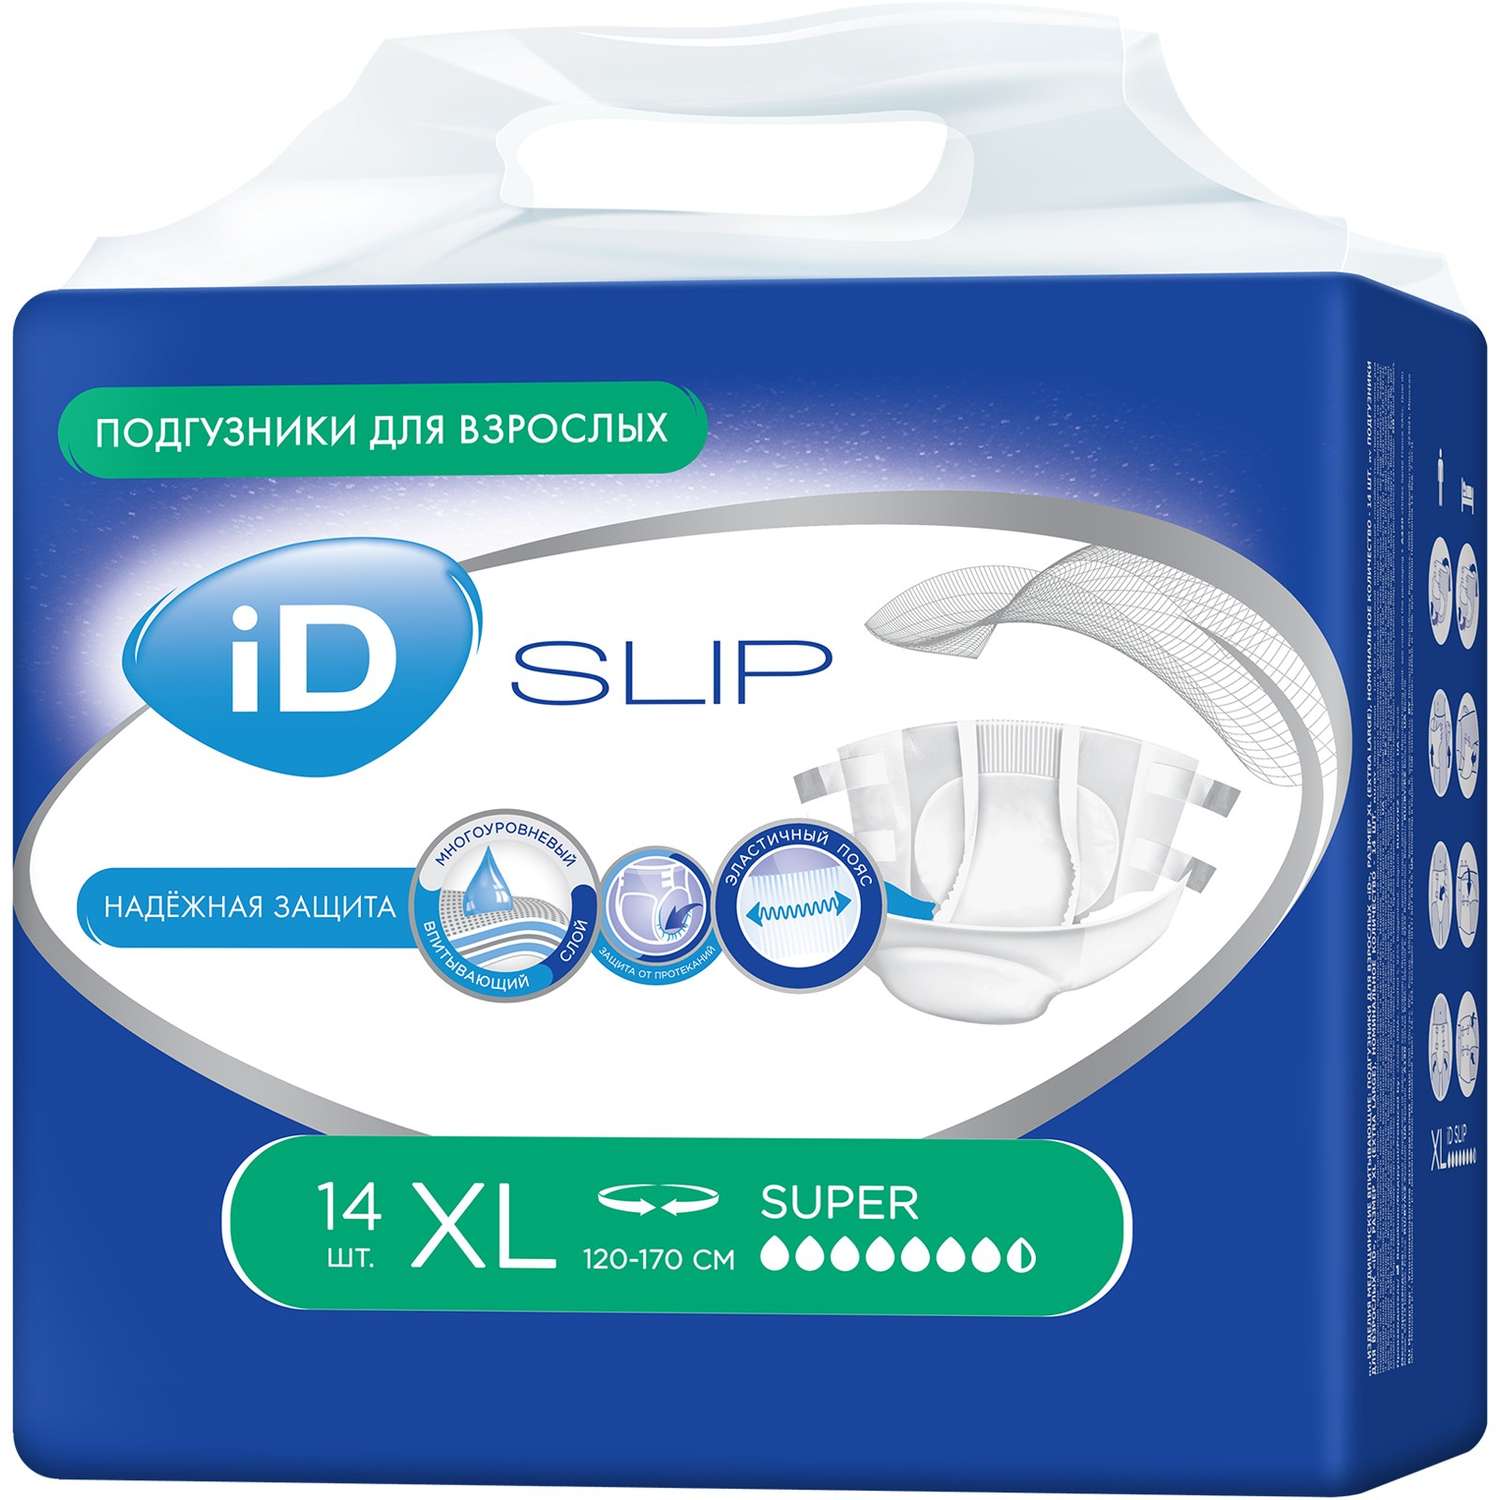 Подгузники для взрослых iD SLIP XL 14 шт. - фото 2